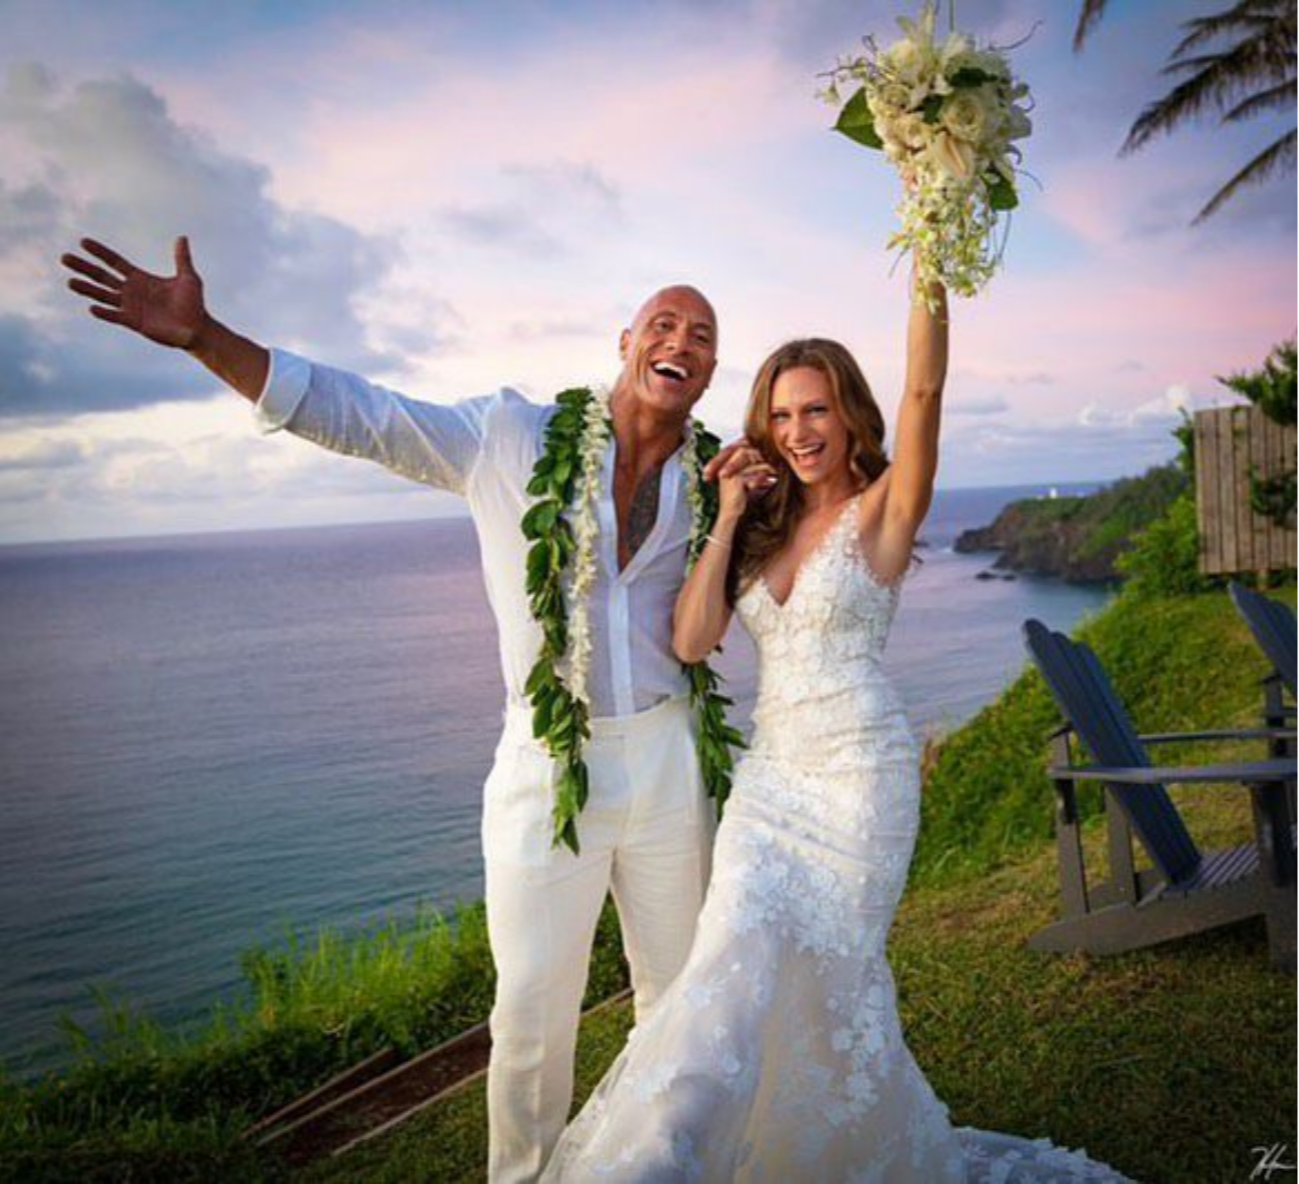 Pasangan aktor Dwayne Douglas Johnson alias The Rock dan musisi Lauren Hashian menikah di Hawaii, pada Minggu 18 Agustus 2019.